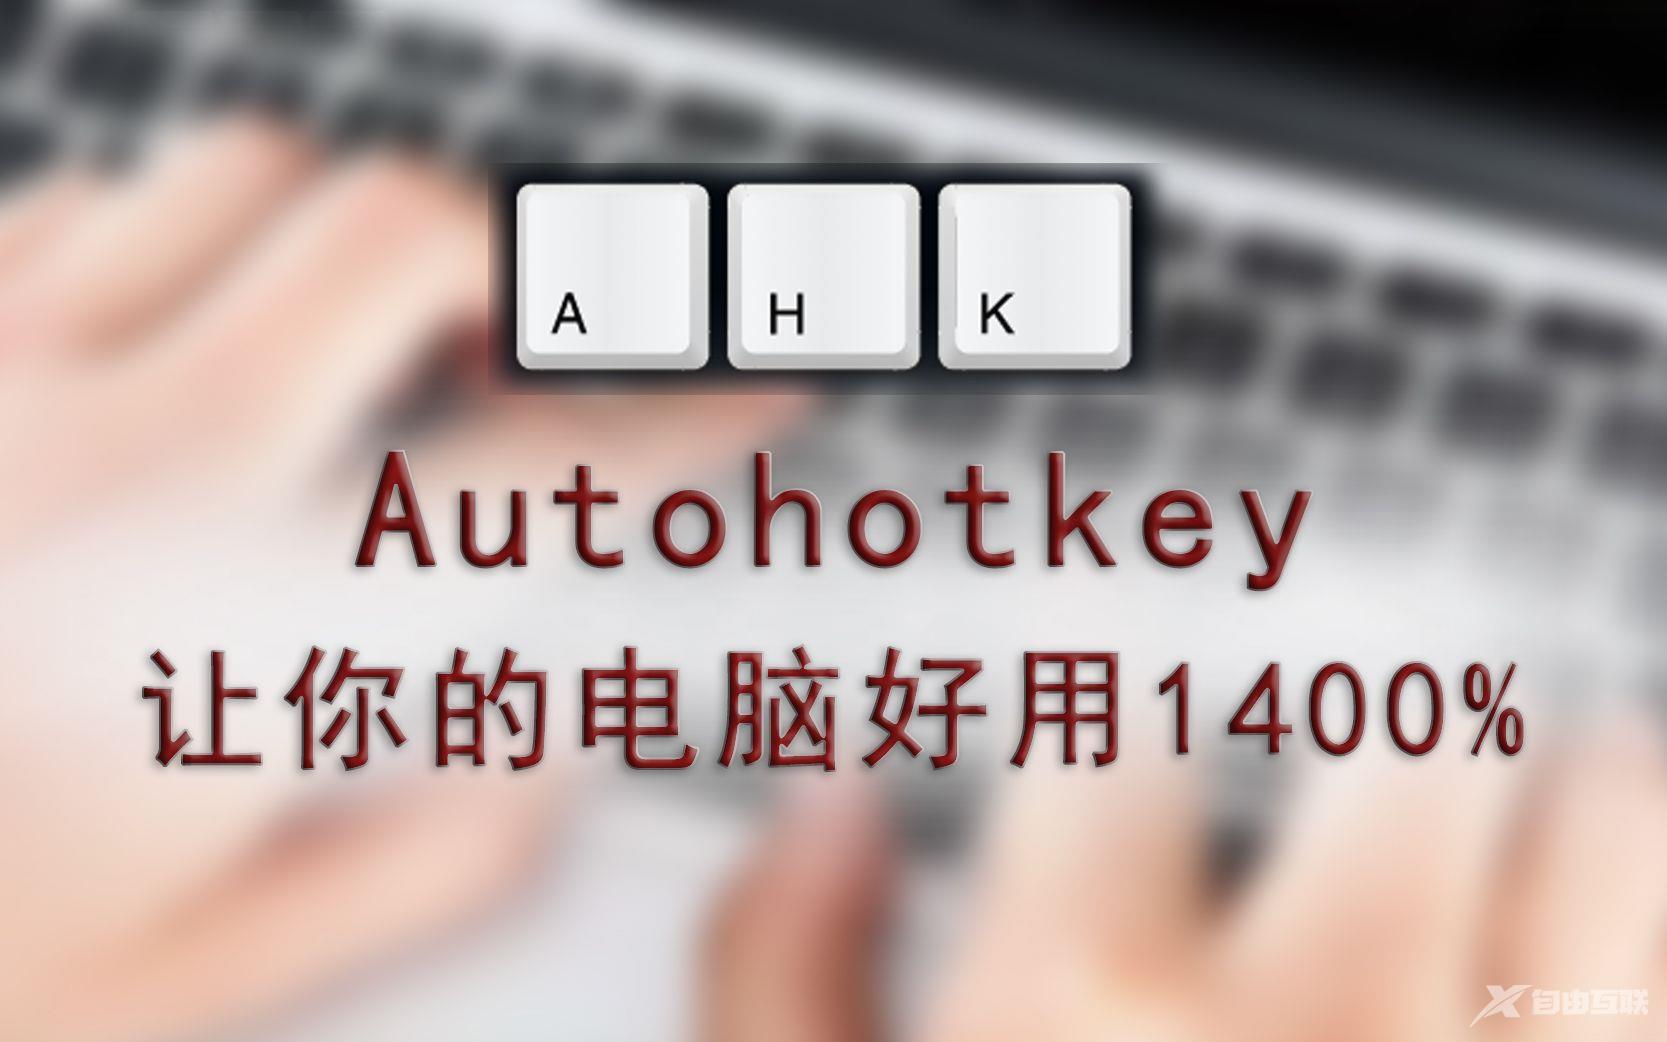 《Autohotkey》键盘字符代码